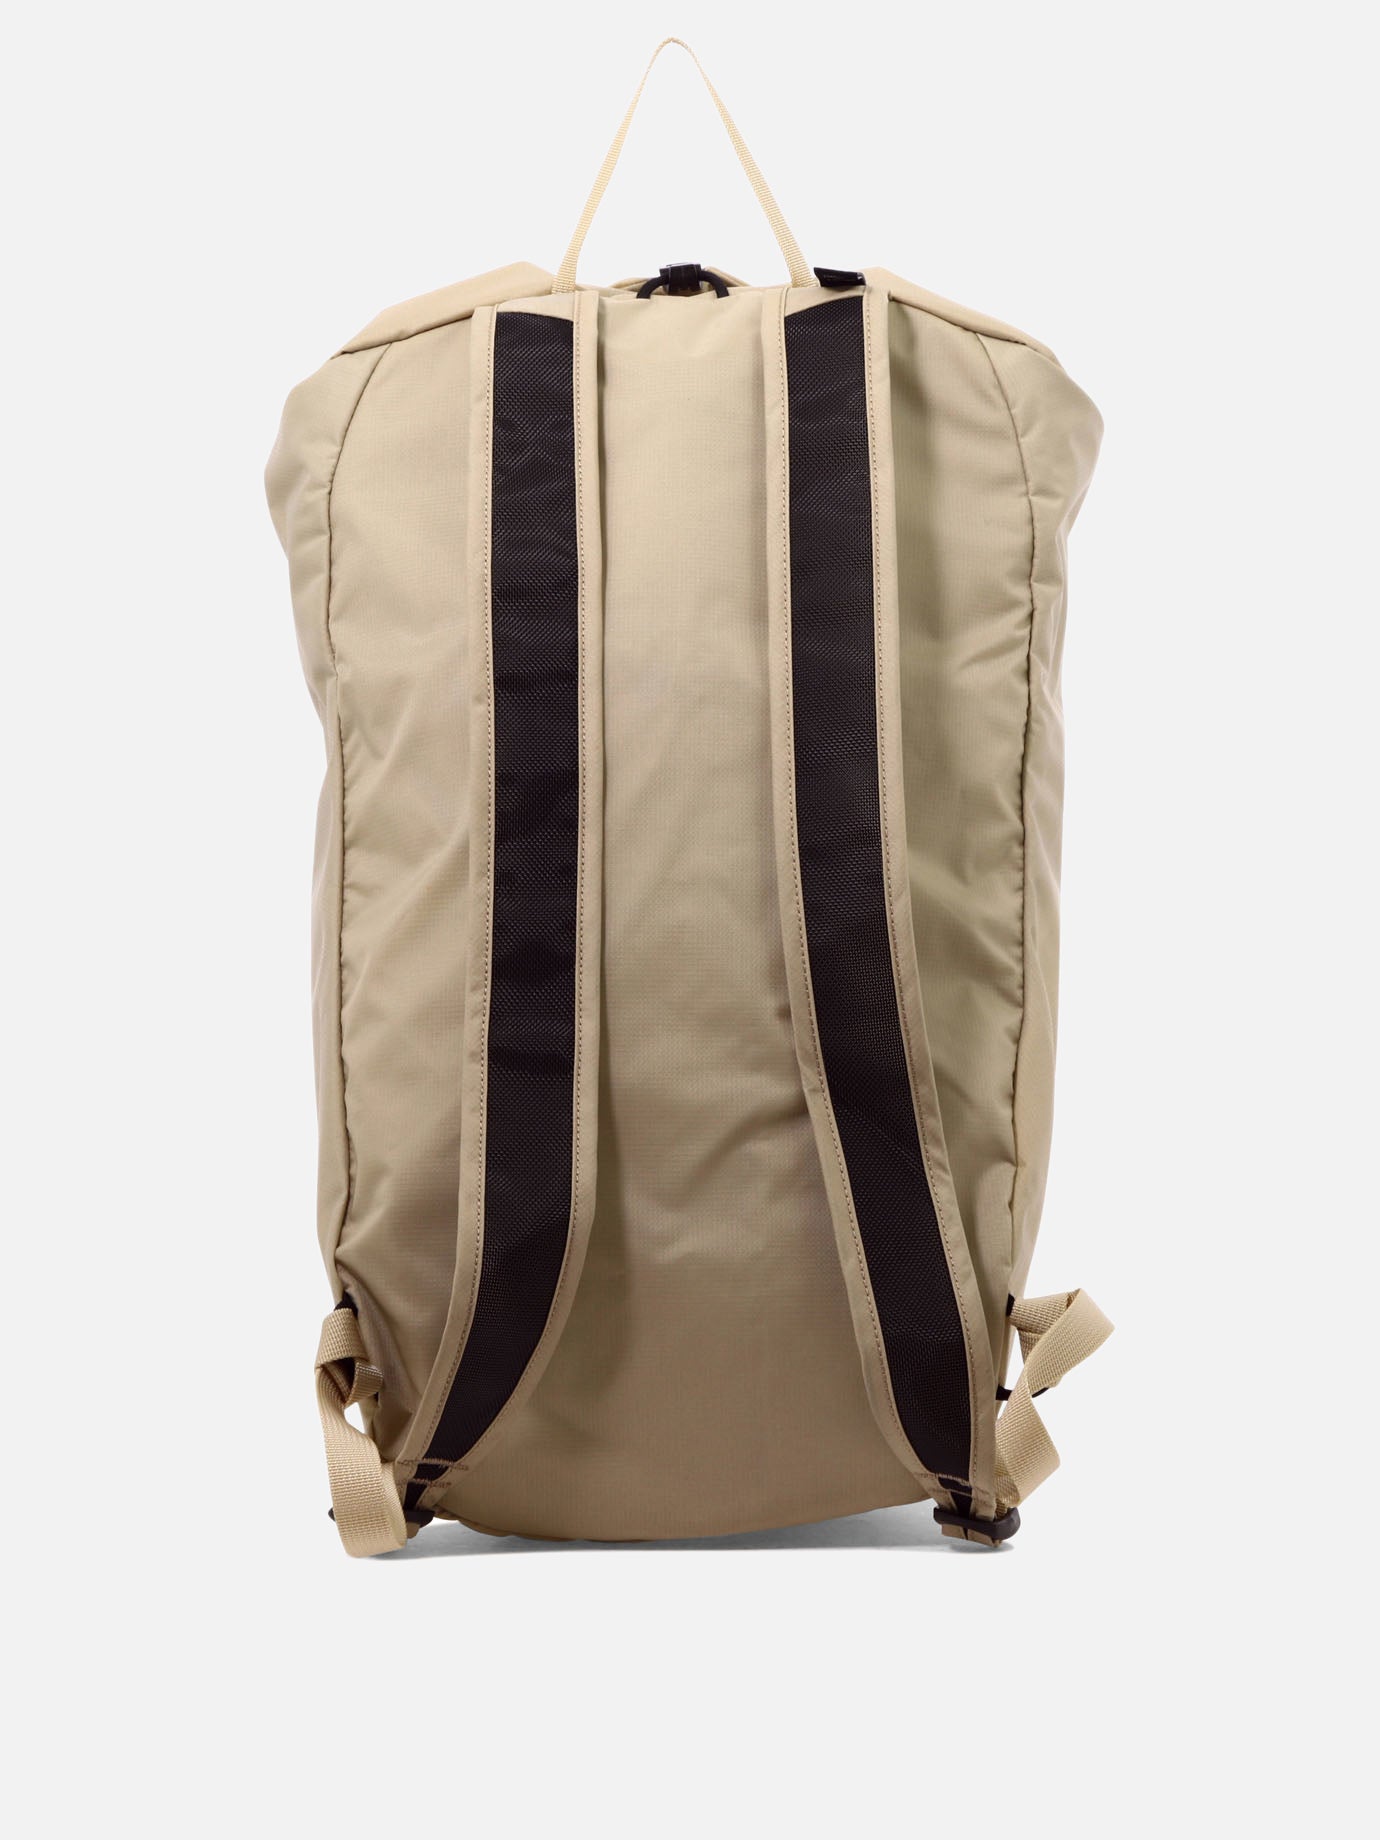 "Heliad 10L" backpack